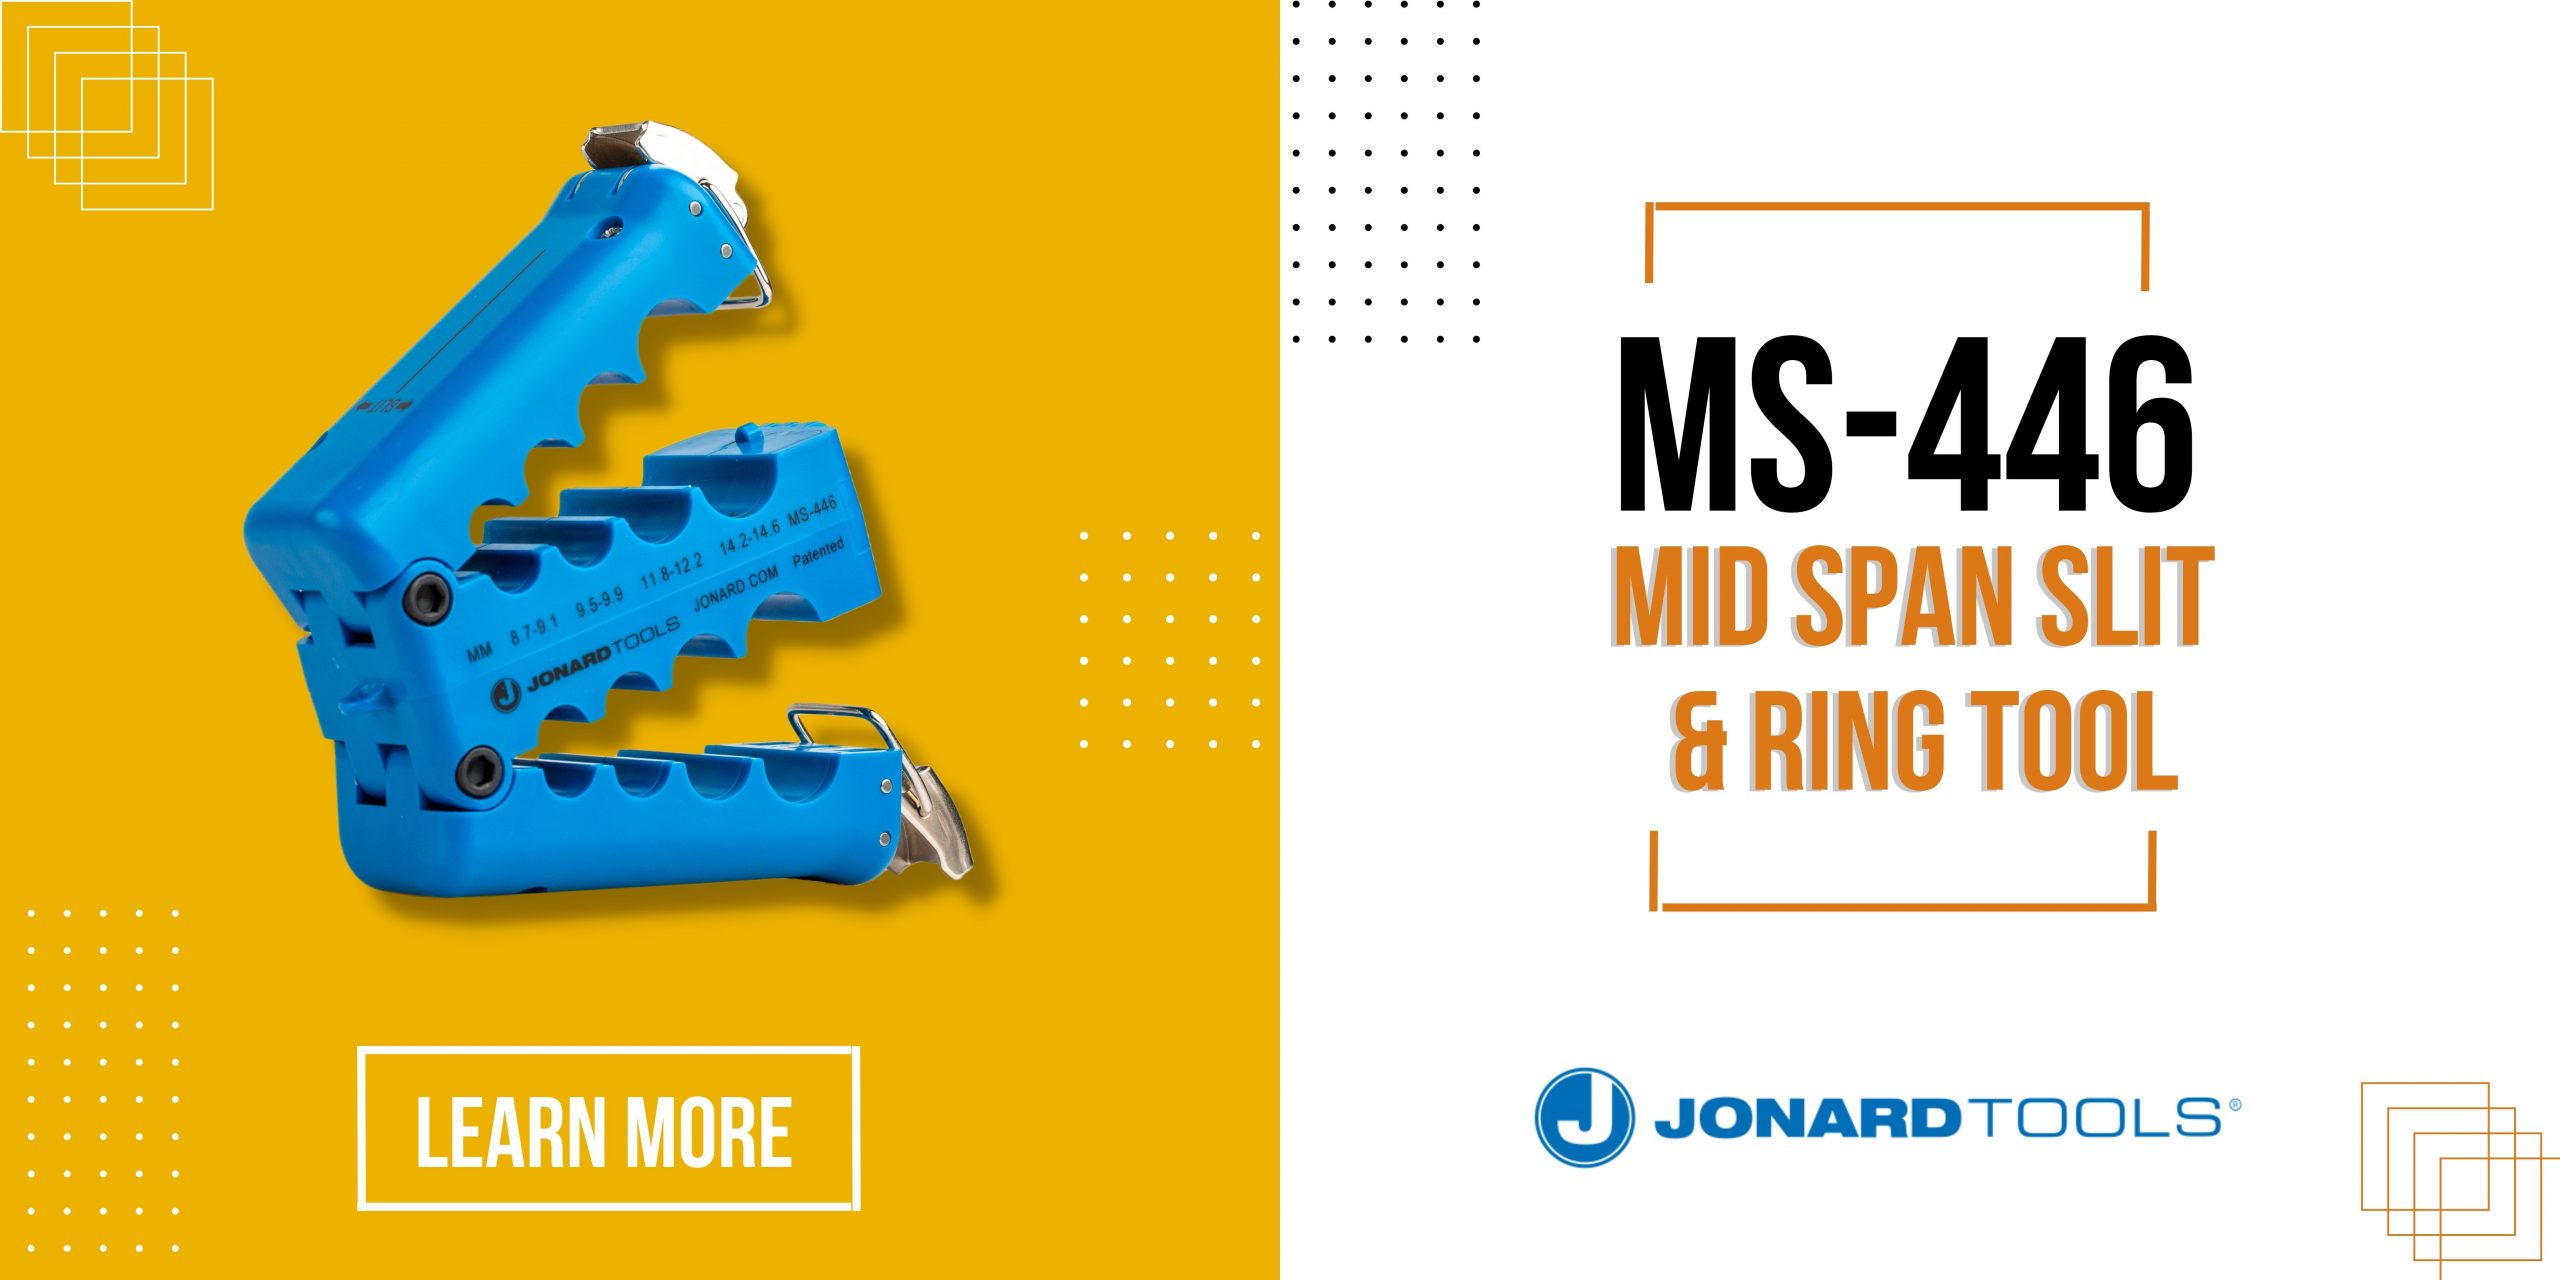 MS-446 Mid Span Slit & Ring Tool